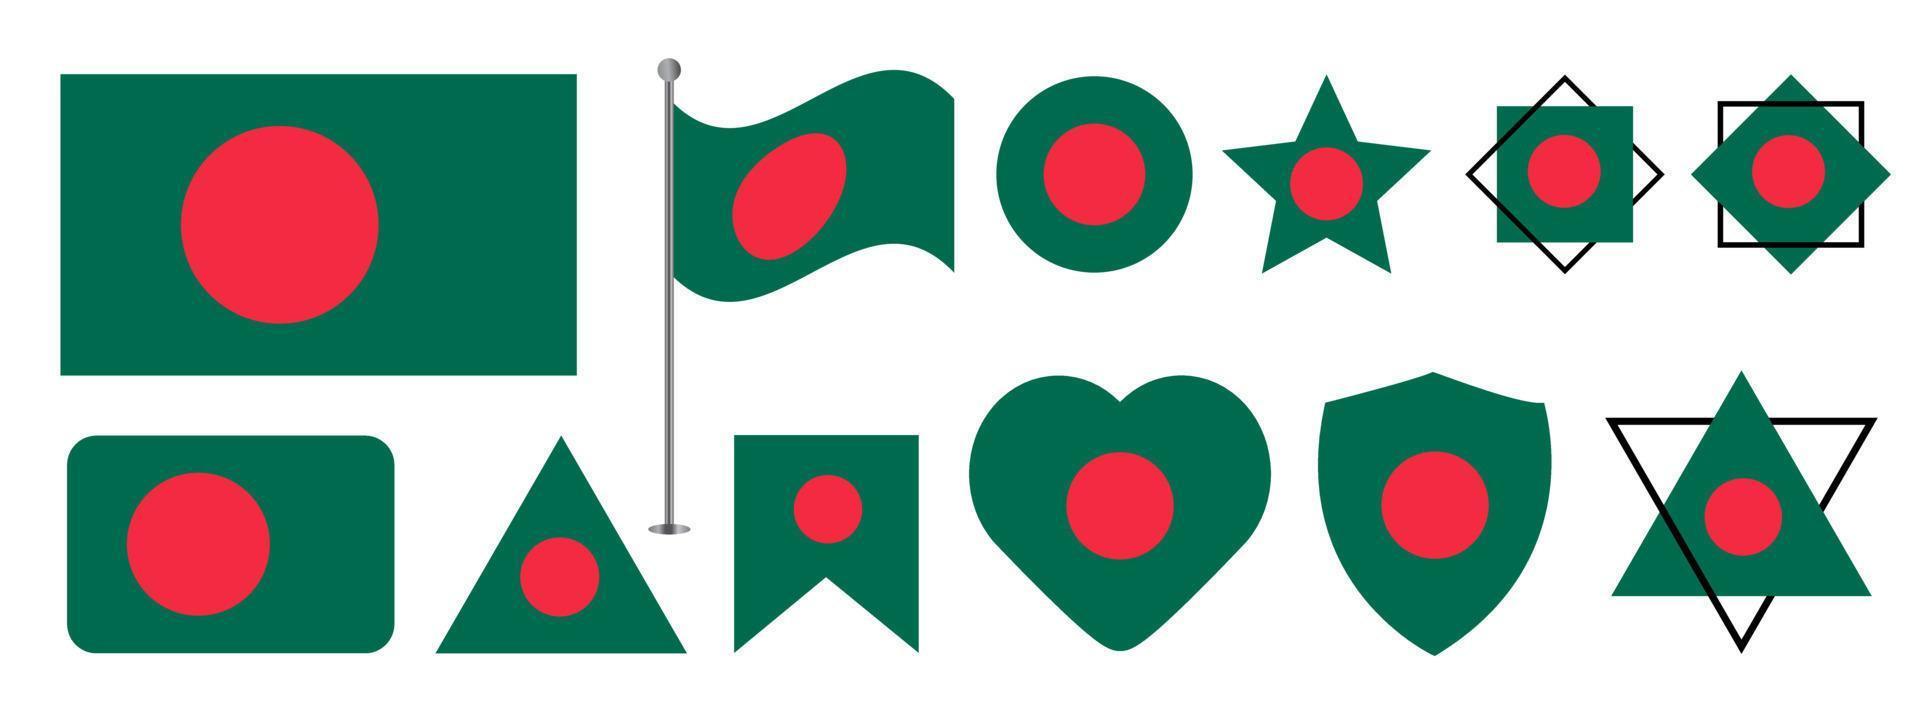 Design der Flagge von Bangladesch. Bangladesch Nationalflaggen-Vektor-Design-Set. bangladesch flaggenvektorillustration vektor